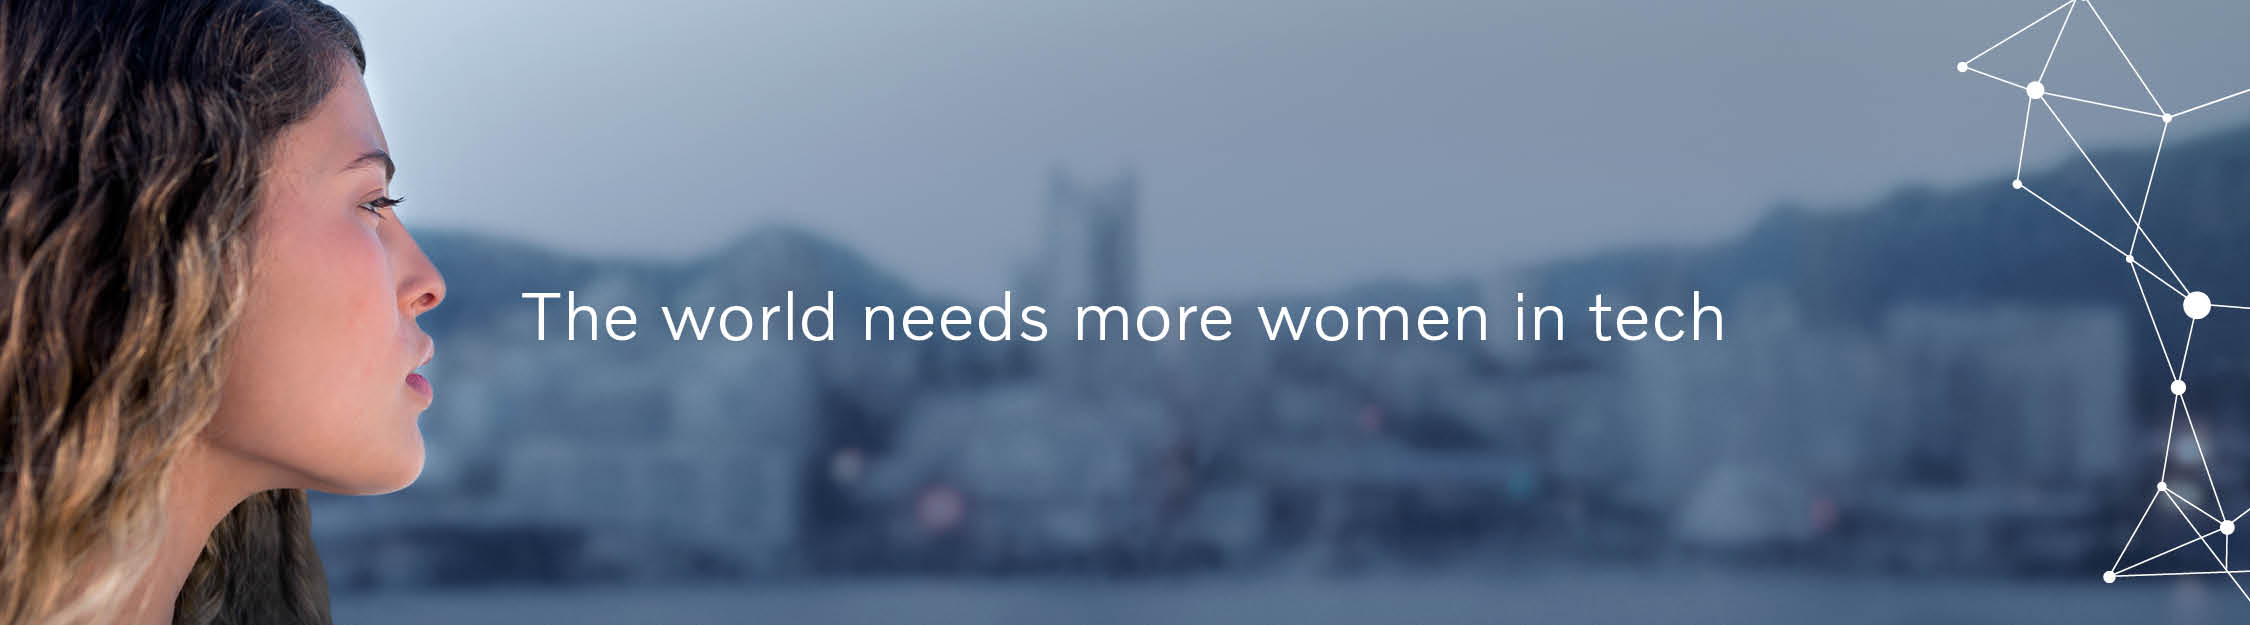 Them world needs more women in tech